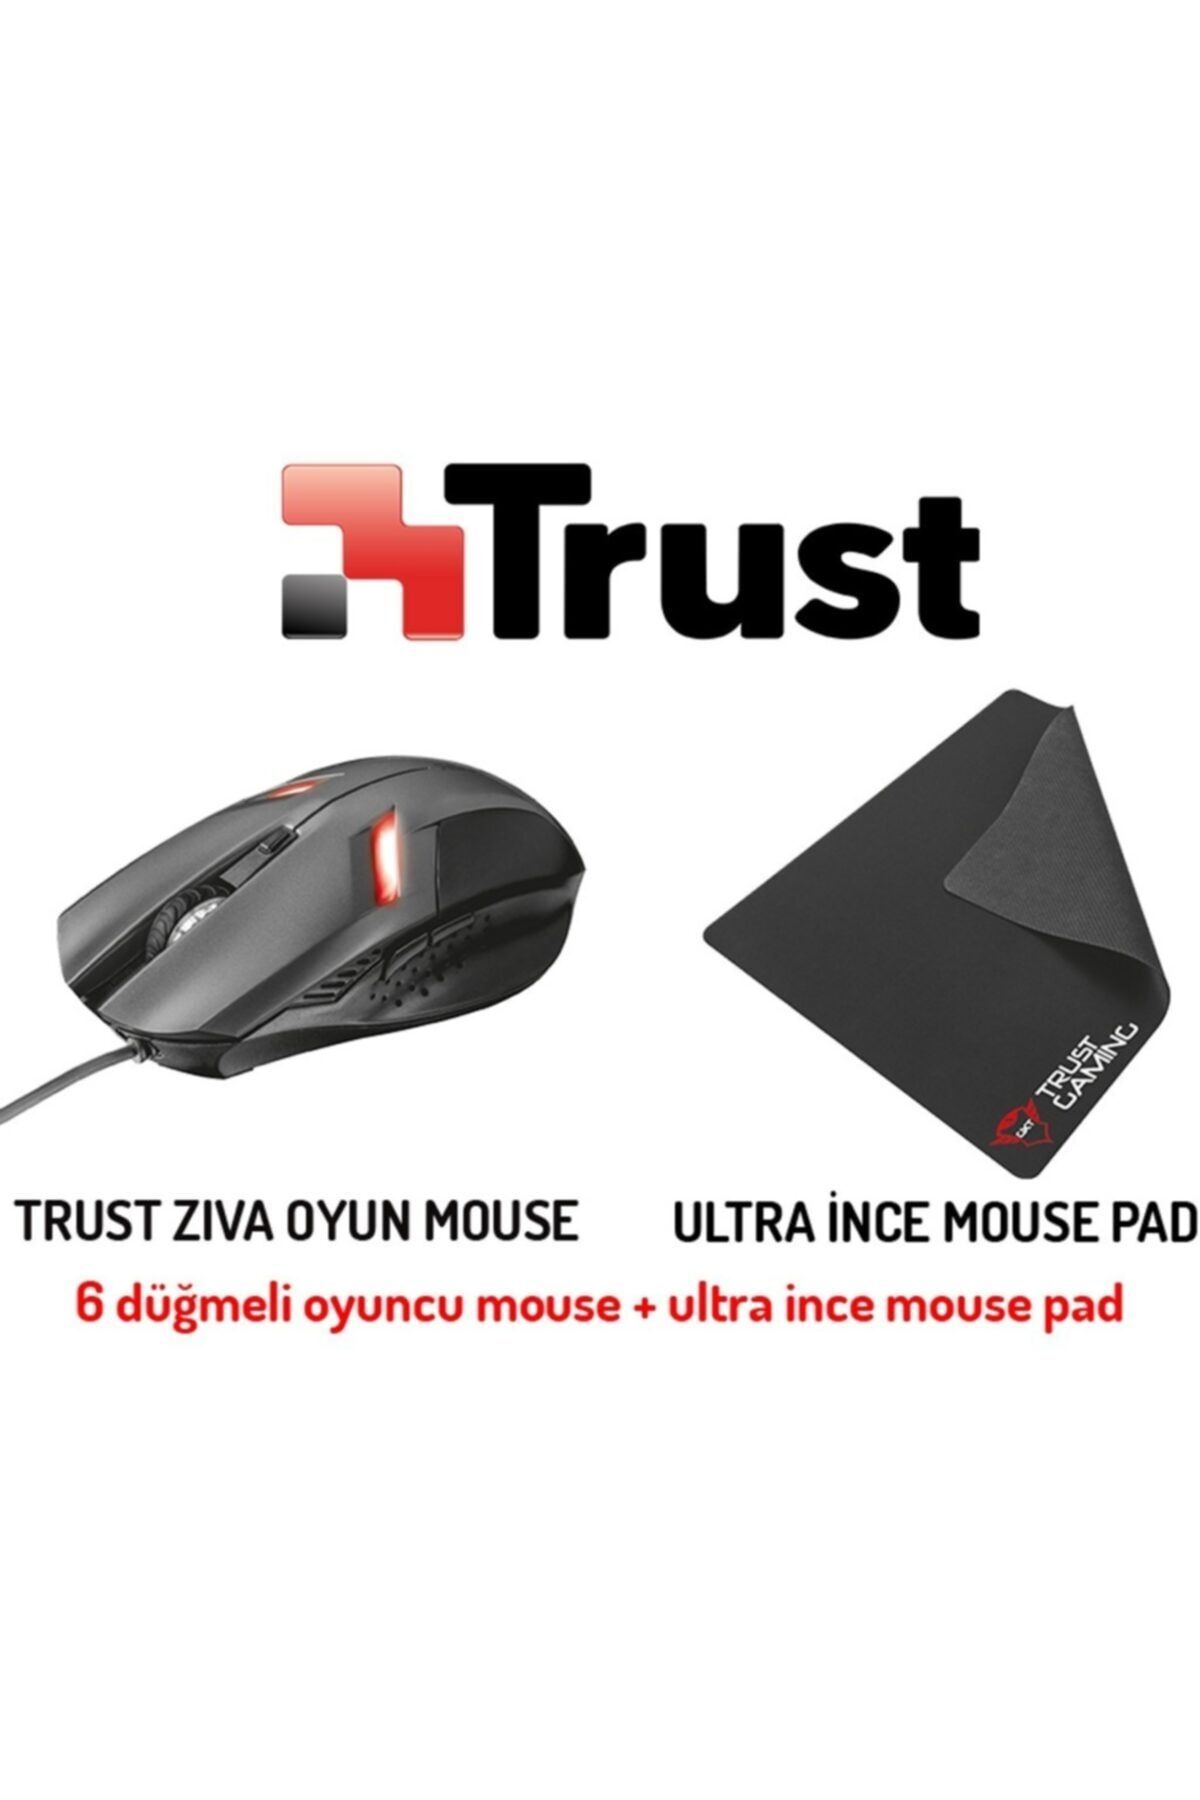 Trust Ziva Gaming Mouse Ve Mouse Pad Oyuncu Set Fiyati Yorumlari Trendyol